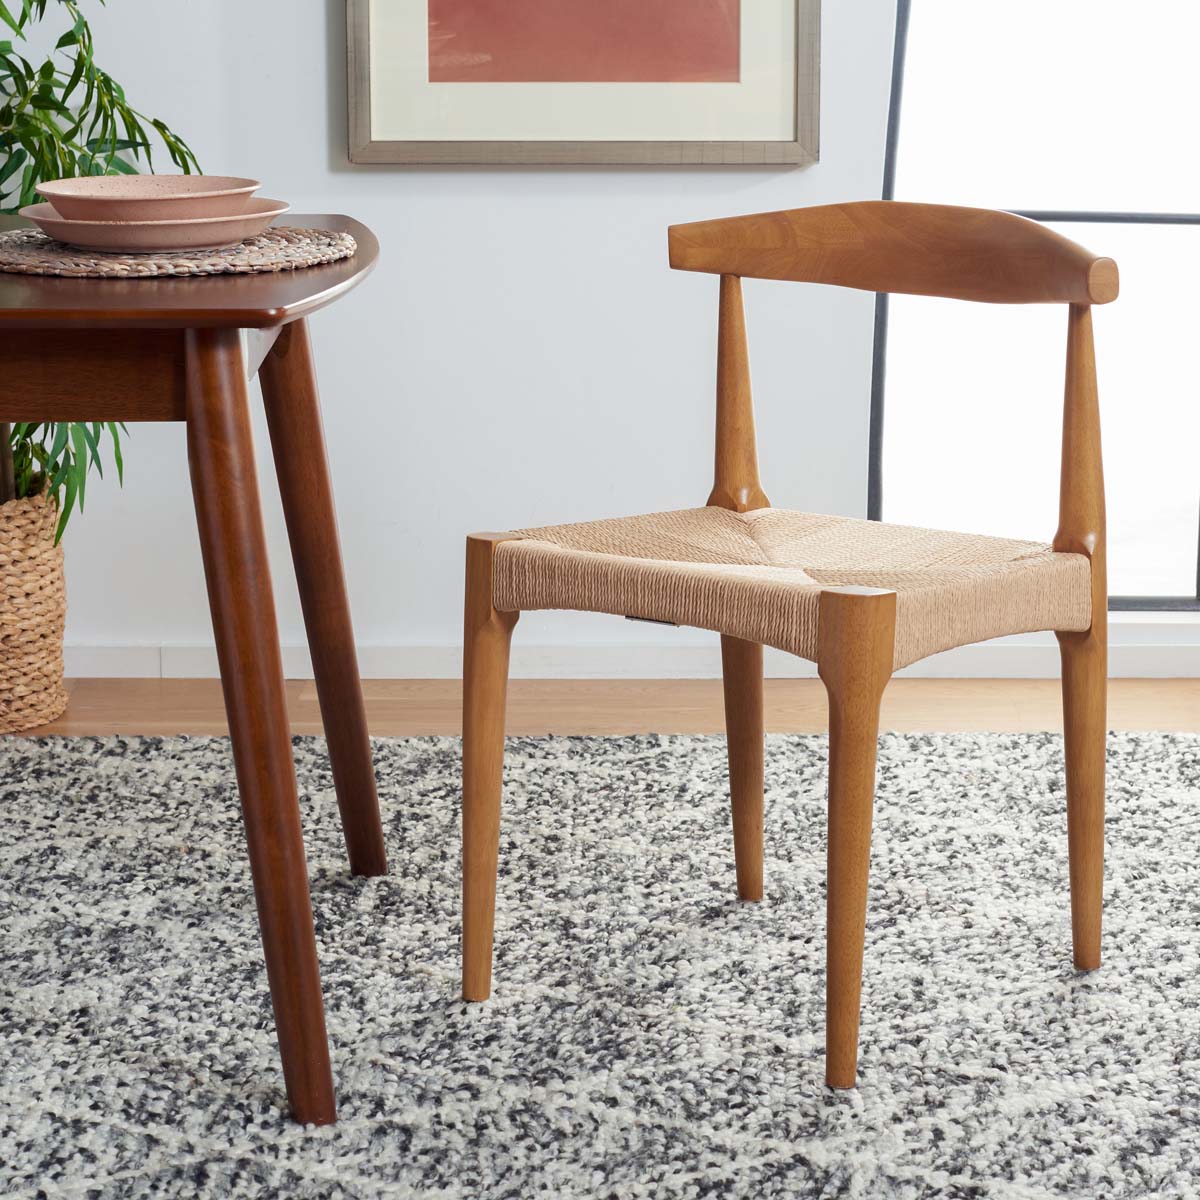 Safavieh Dagney Woven Chair , DCH1008 - Walnut Body / Natural Woven Seat